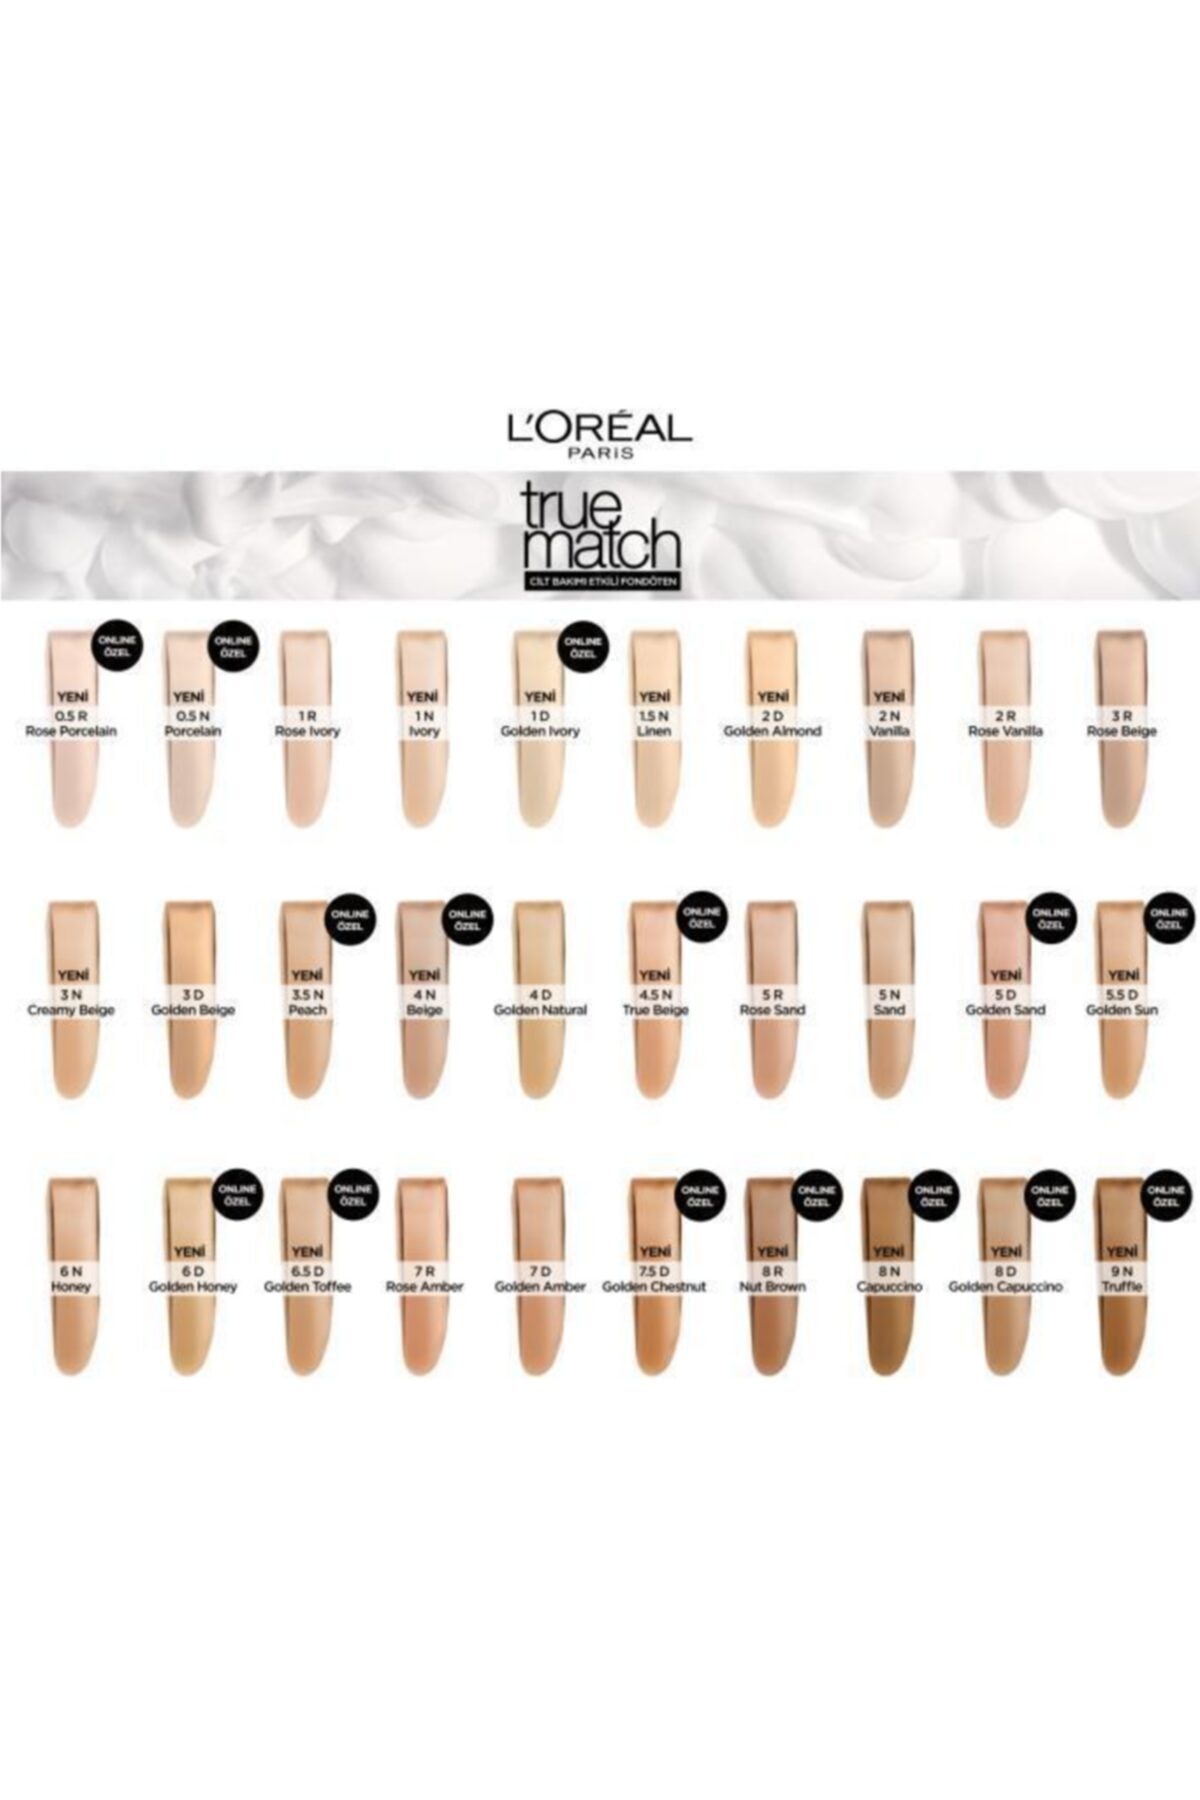 L'Oreal Paris کرم پودر مراقبتی True Match رنگ عسلی بژ شماره 5.5D